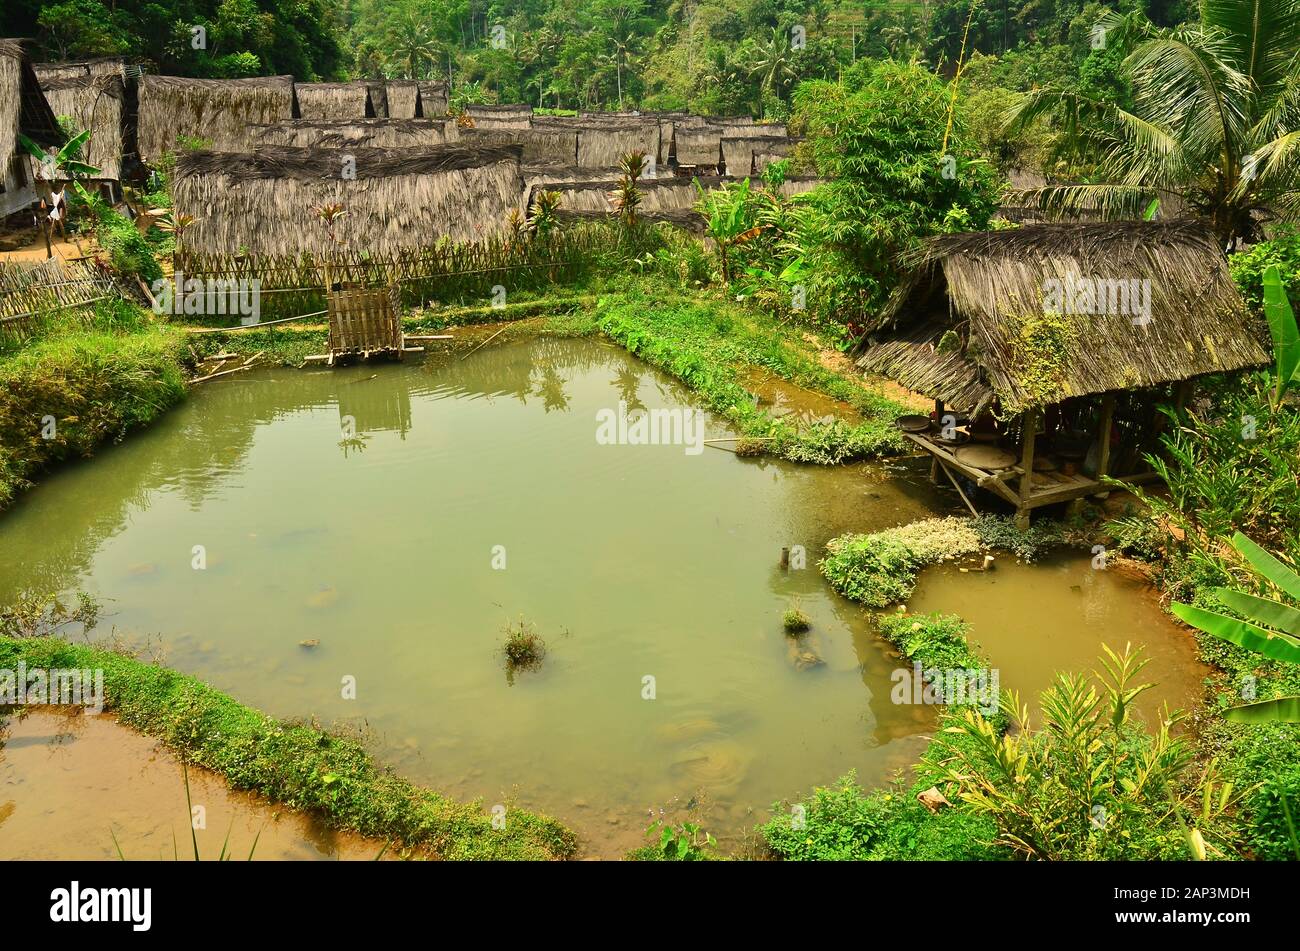 village ponds between residents' houses in Tasikmalaya, West Java, Indonesia Stock Photo